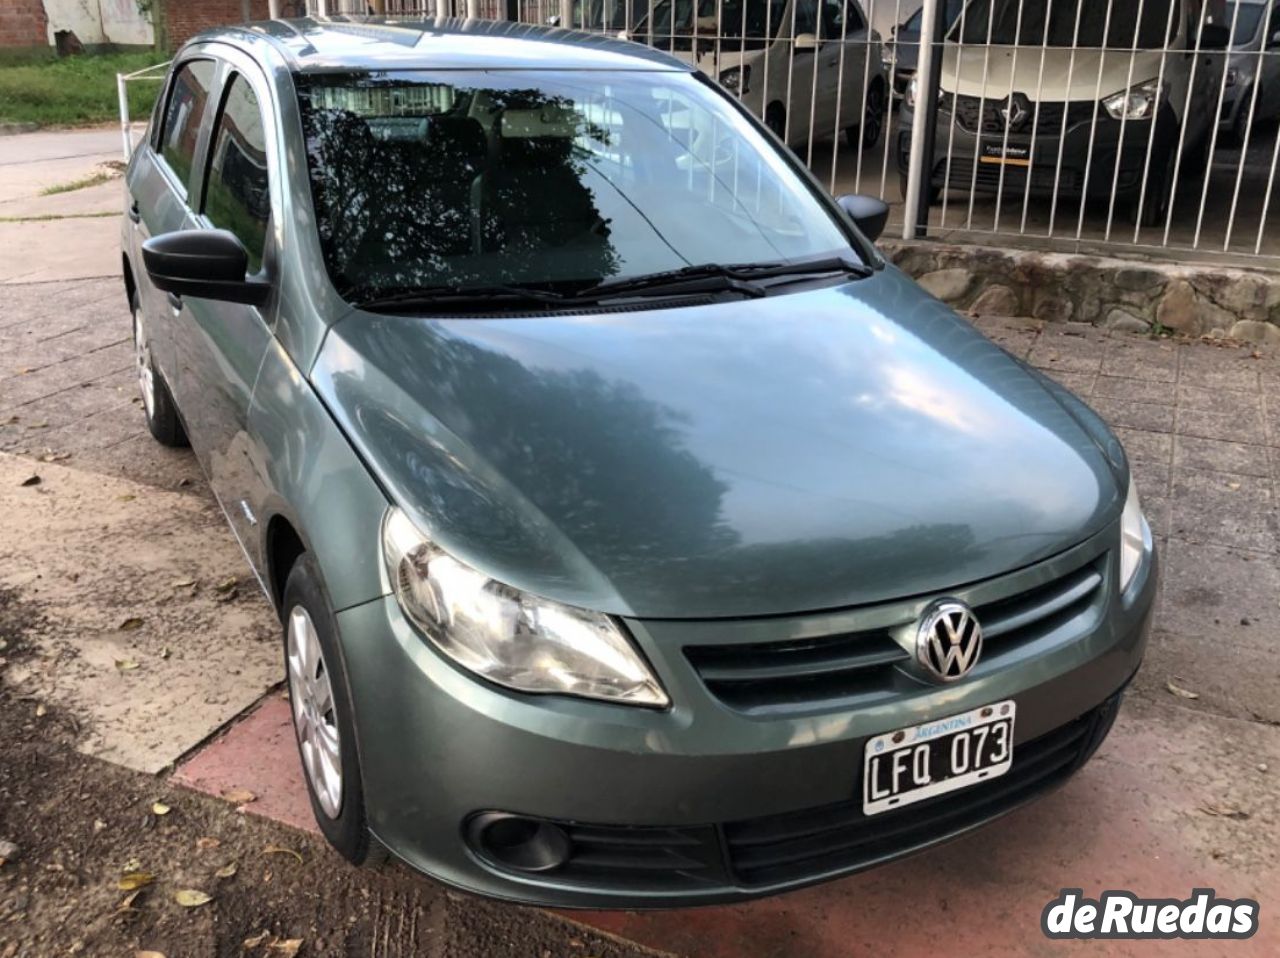 Volkswagen Gol Trend Usado en Salta, deRuedas